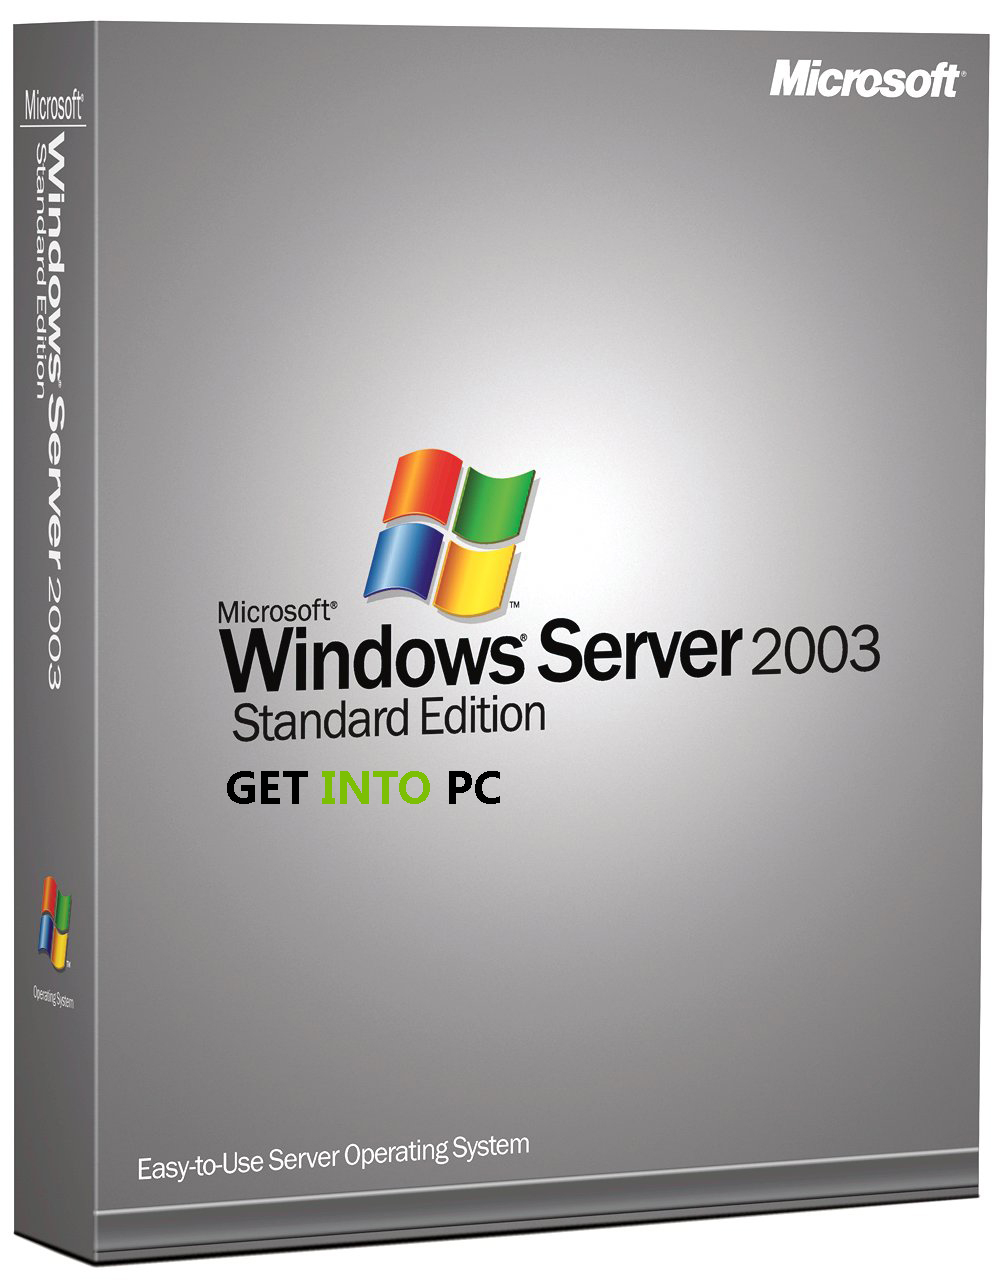 Windows Server 2003 Free Download